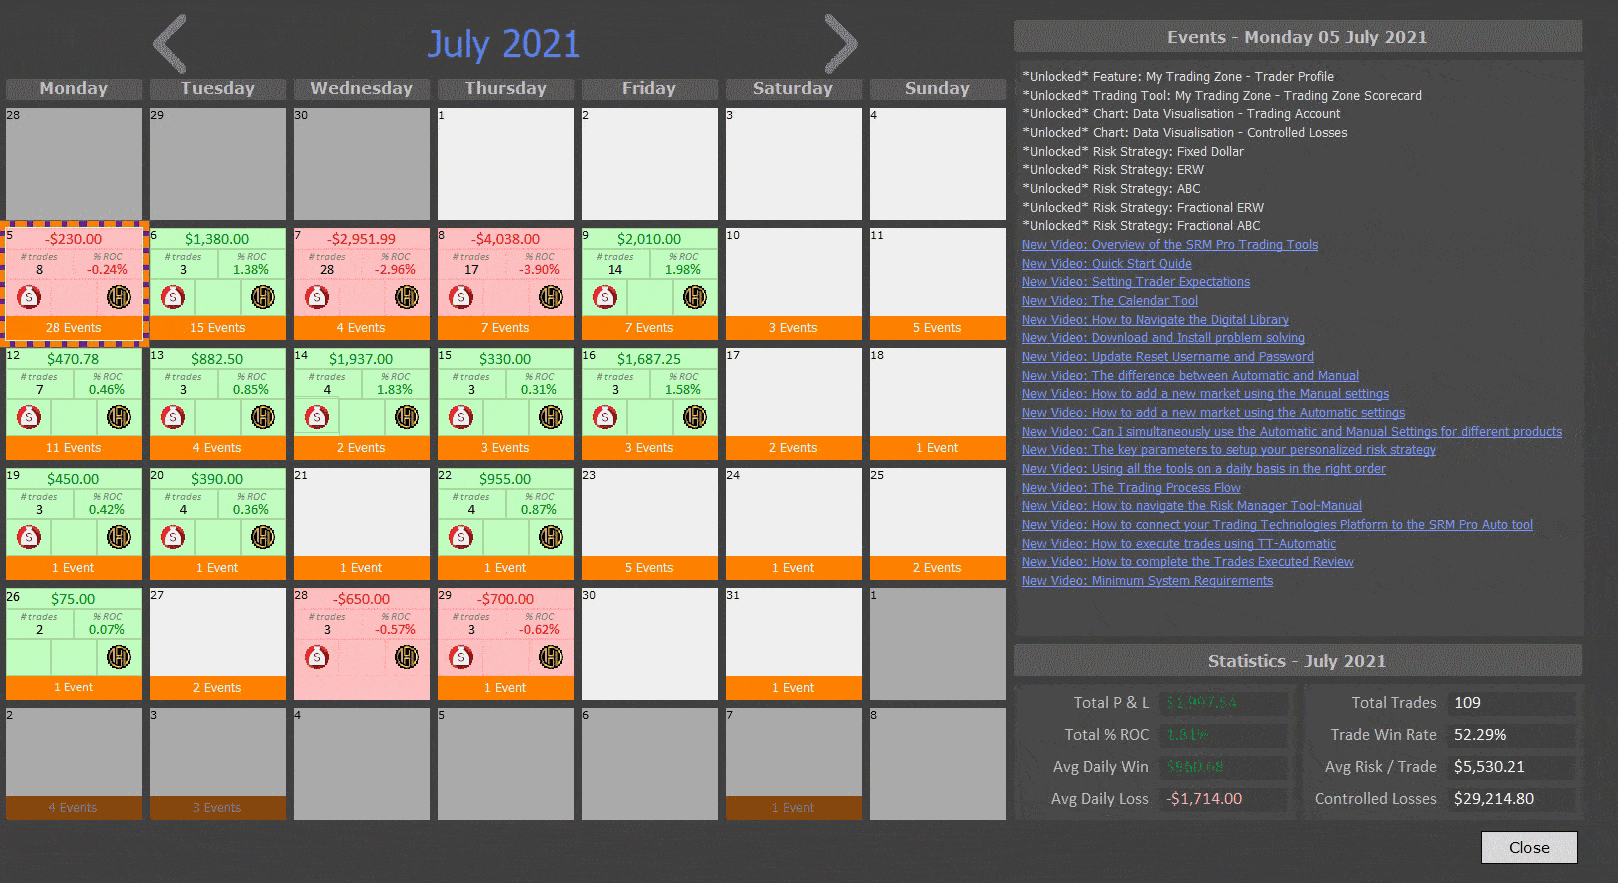 8 Calendar